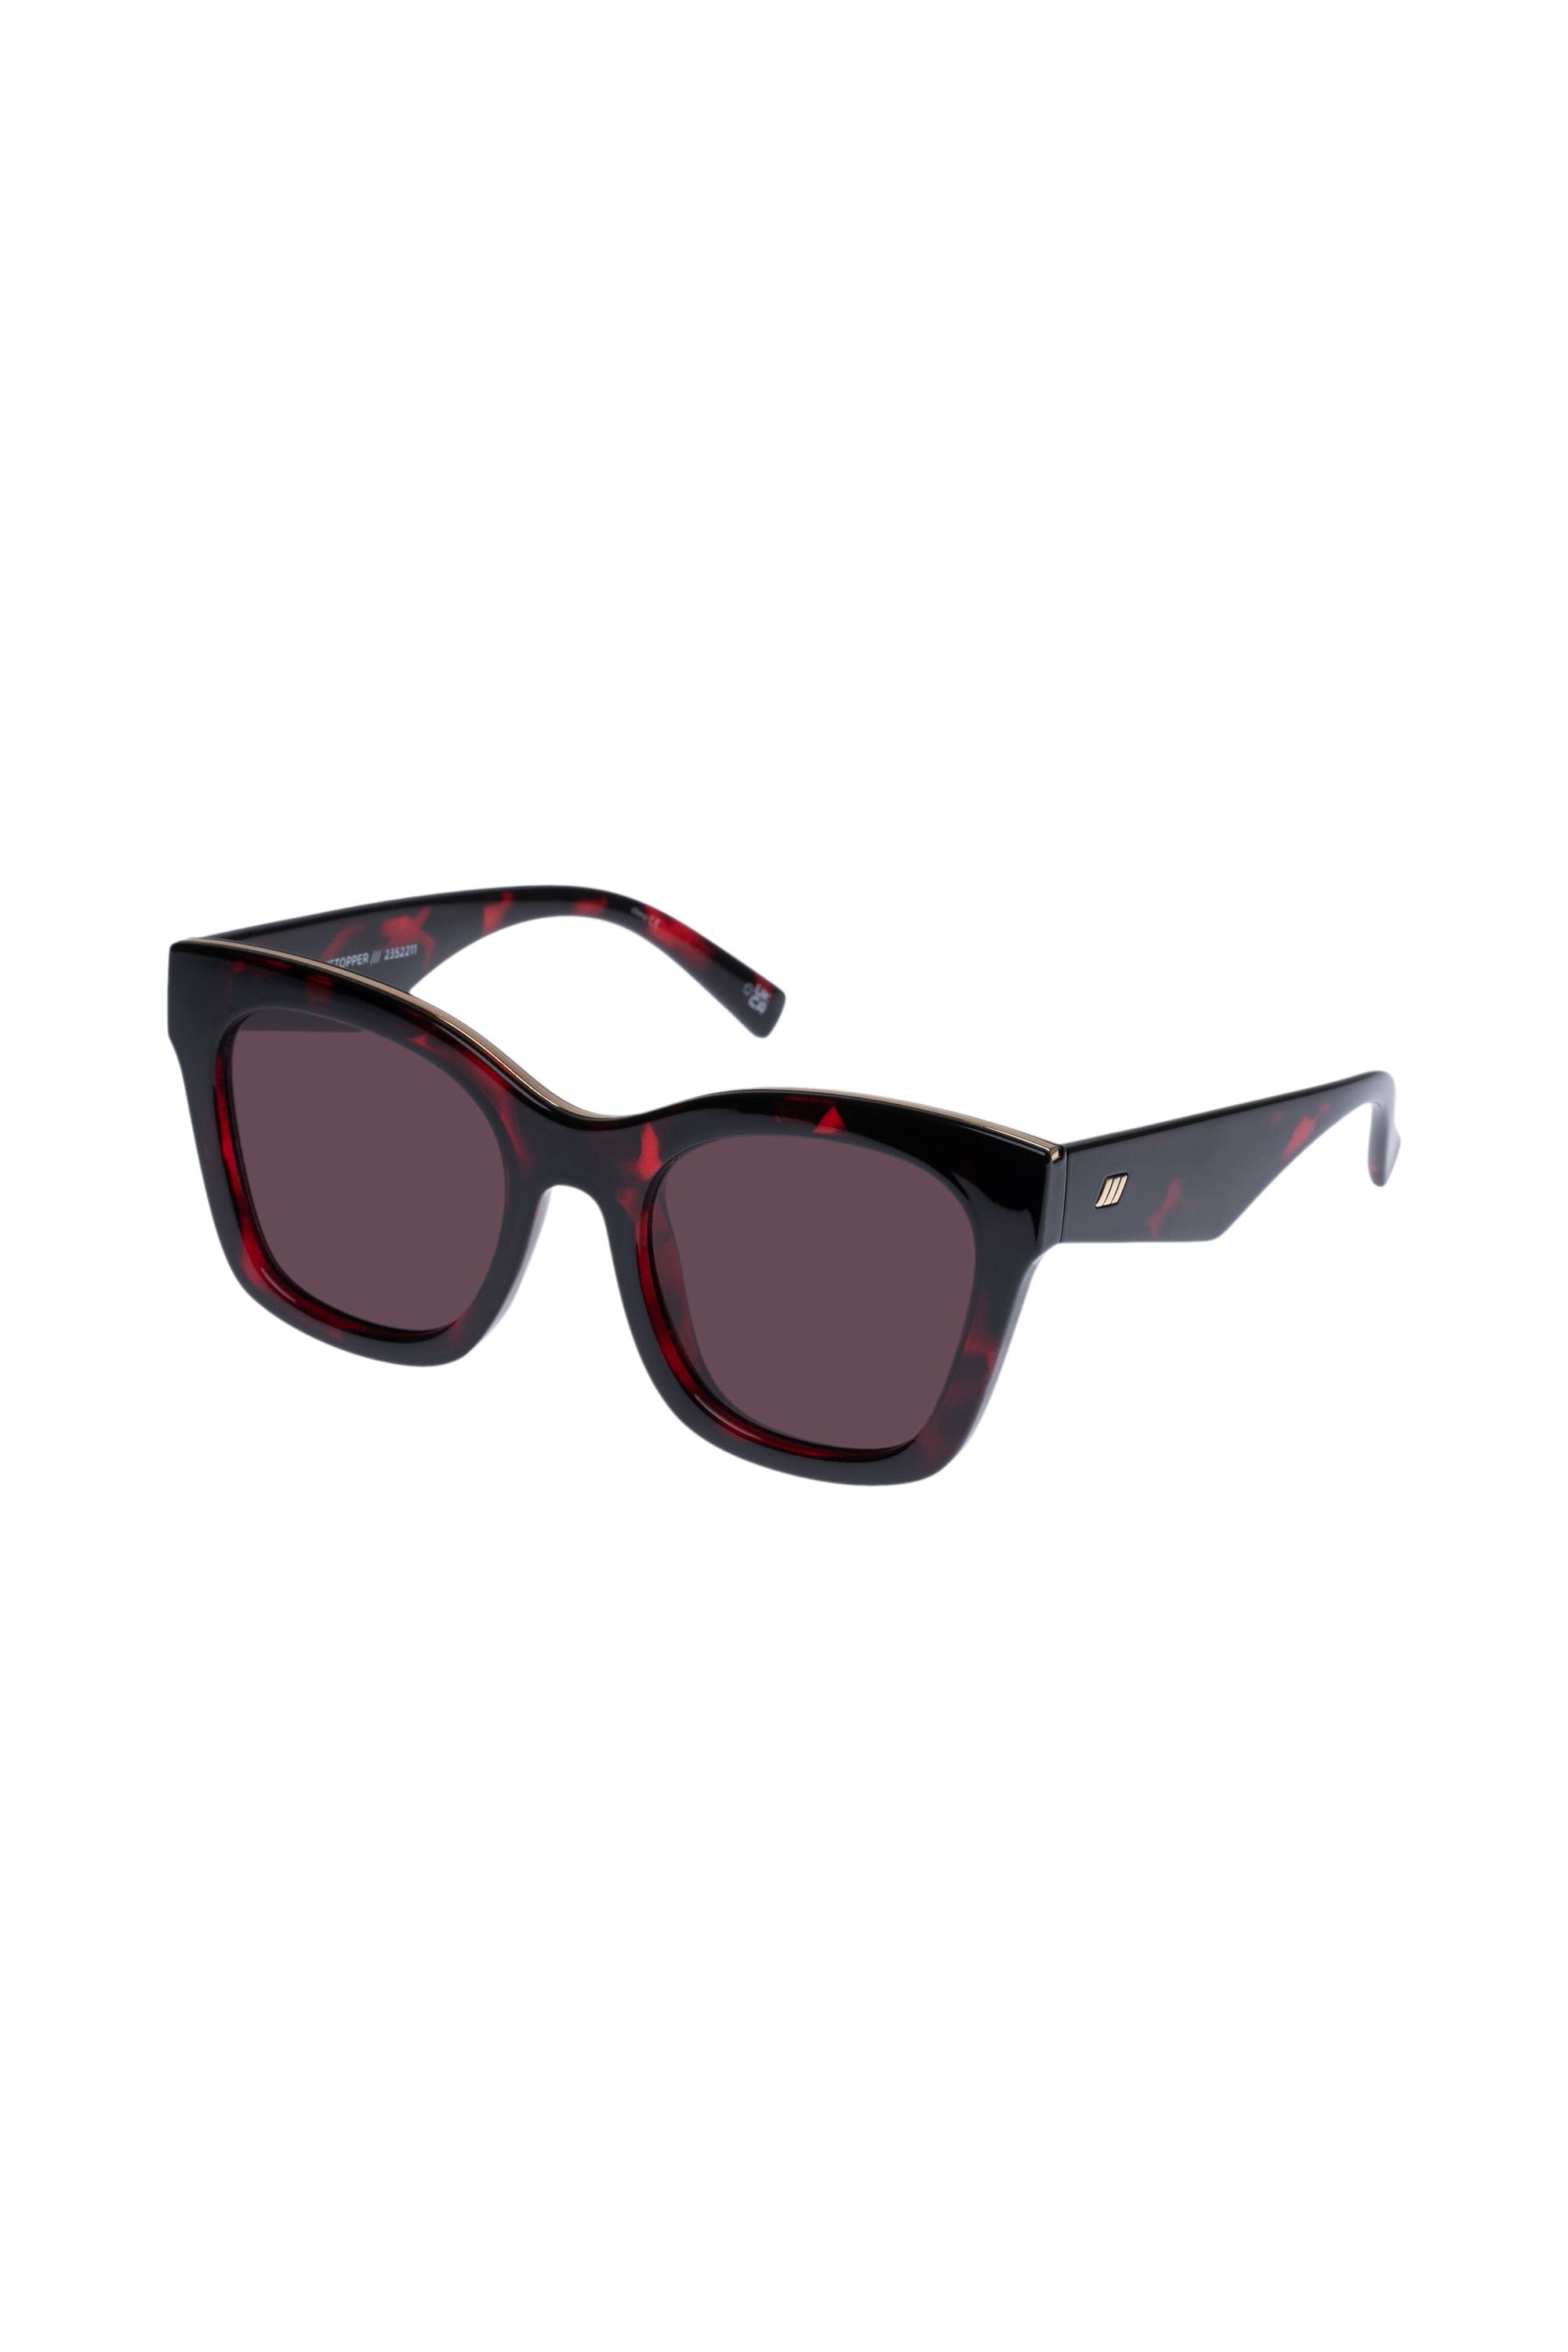 Le Specs Showstopper Sunglasses - Cherry Tort - RUM Amsterdam